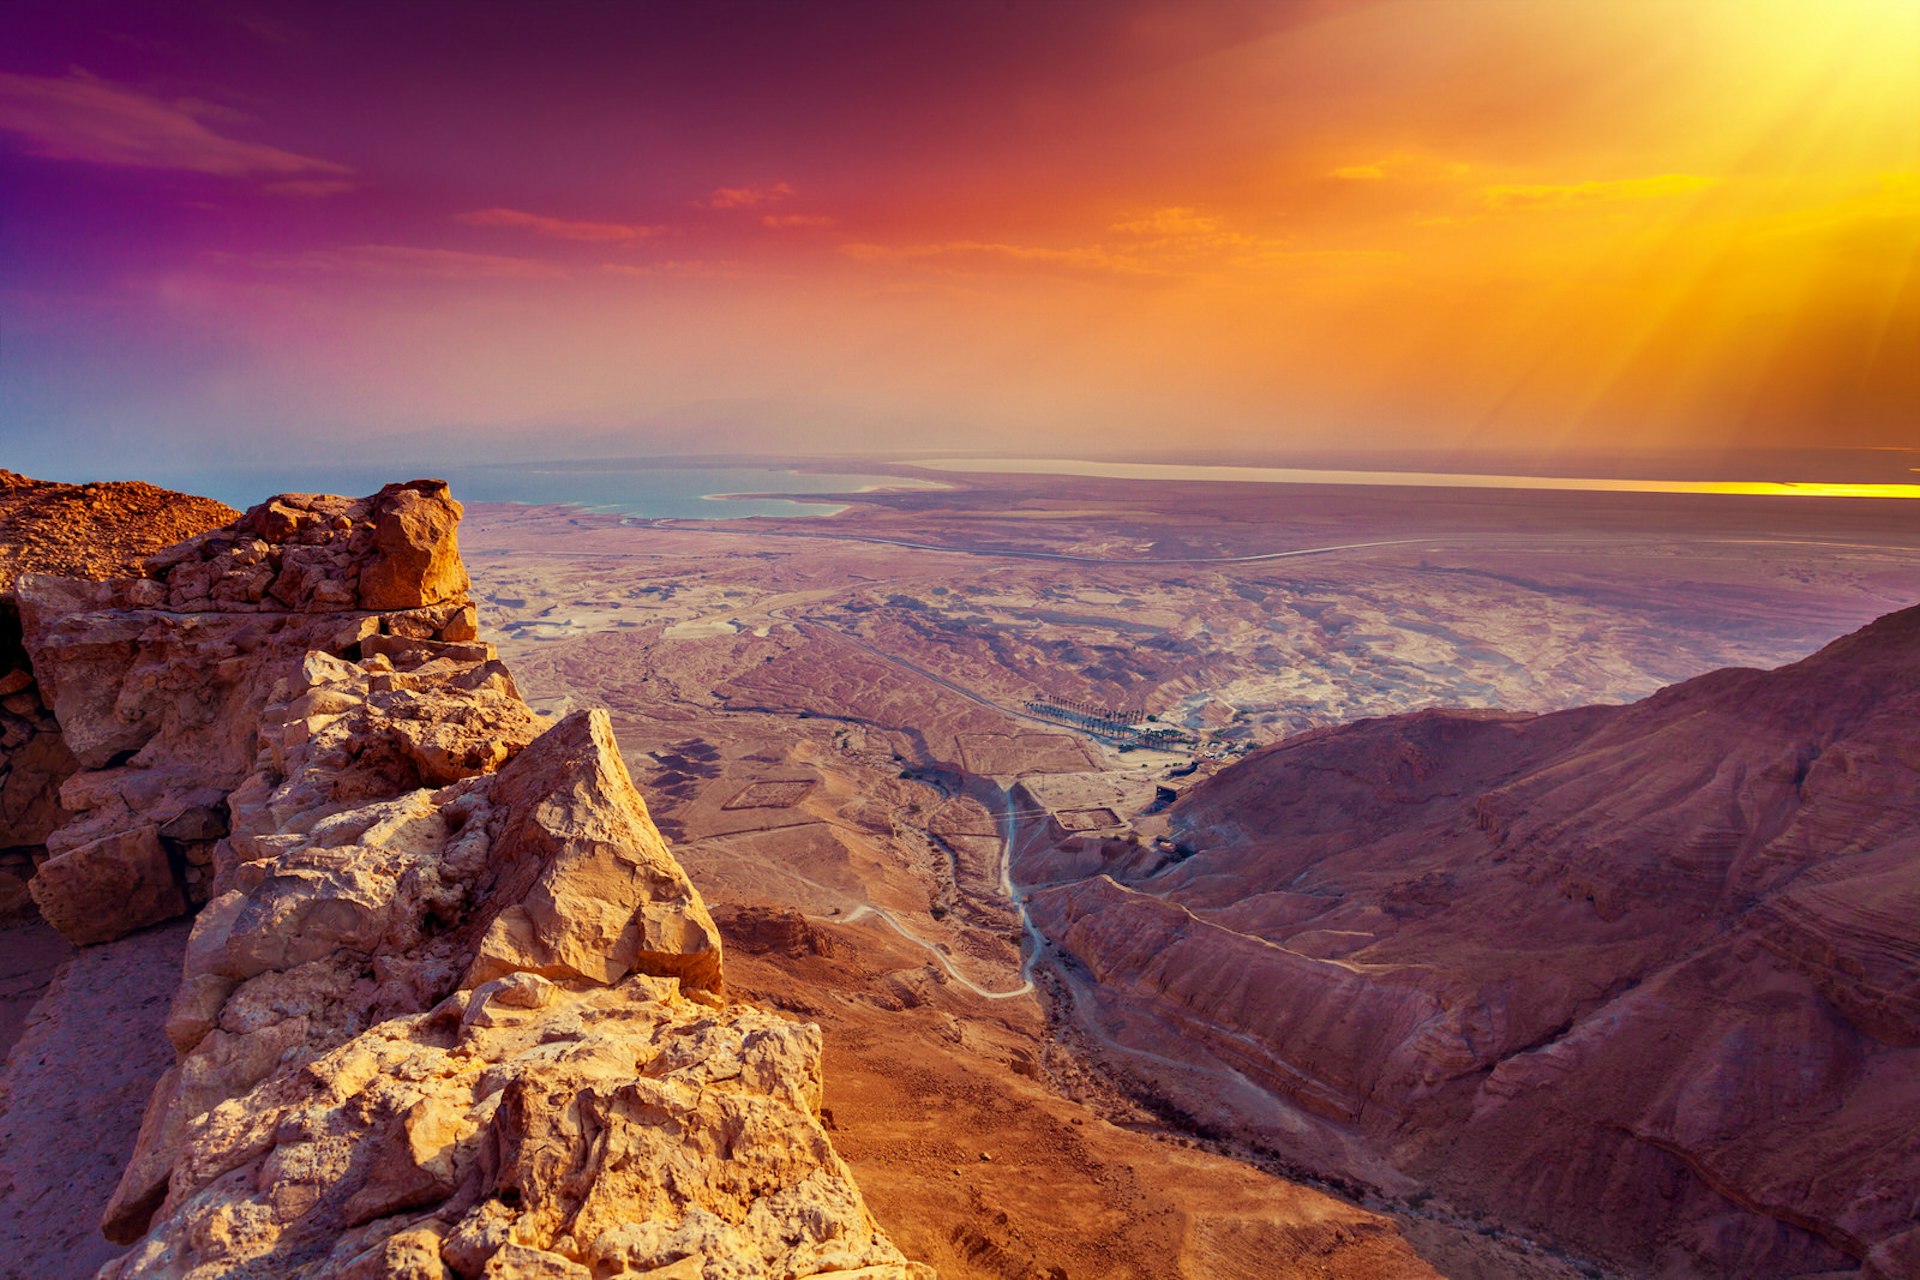 Sunrise at Masada. Image by vvvita / Shutterstock